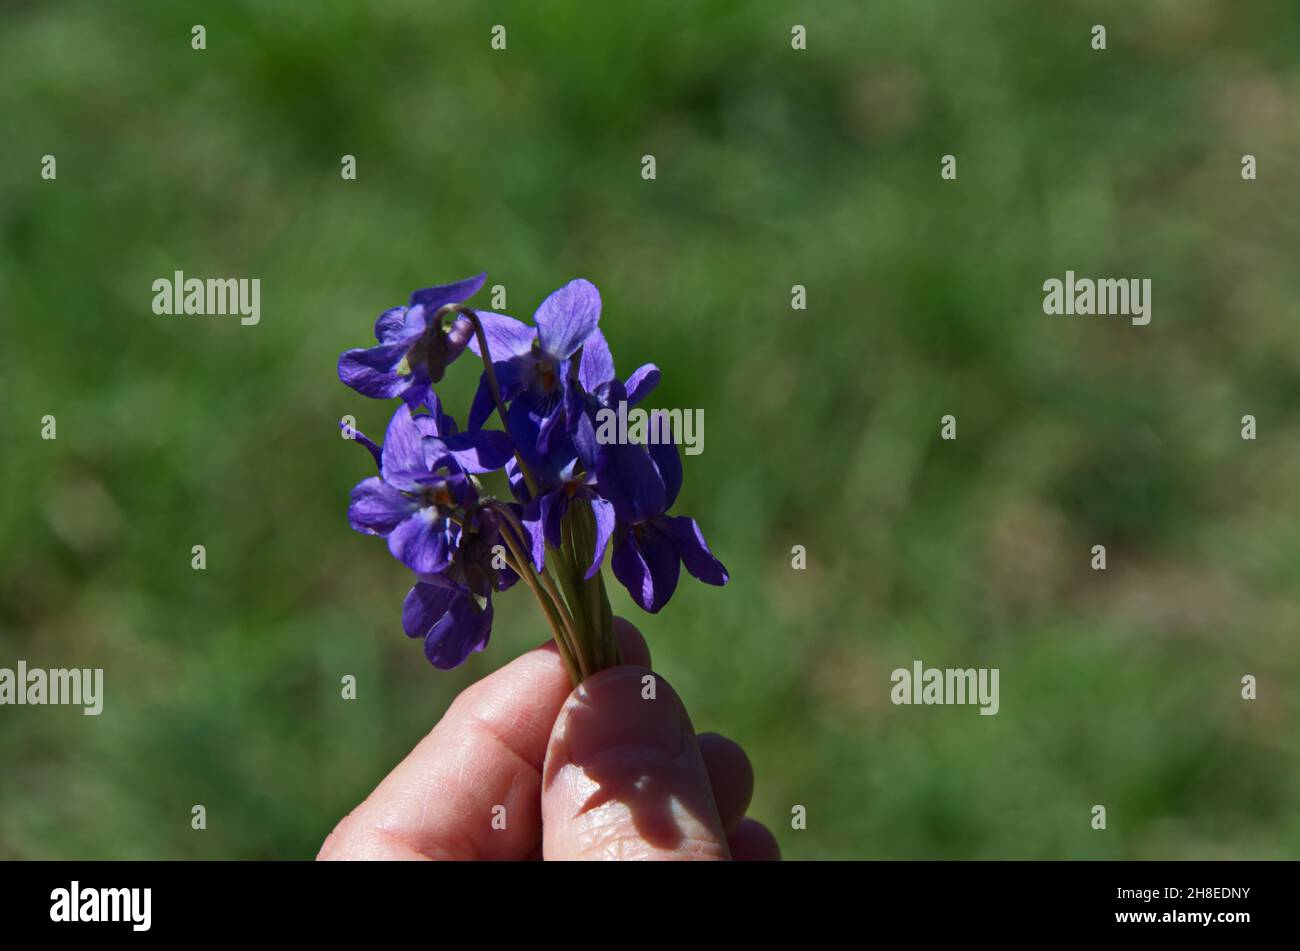 Pansy Violet, Heartsease or Viola odorata blooming in the garden, Sofia, Bulgaria Stock Photo